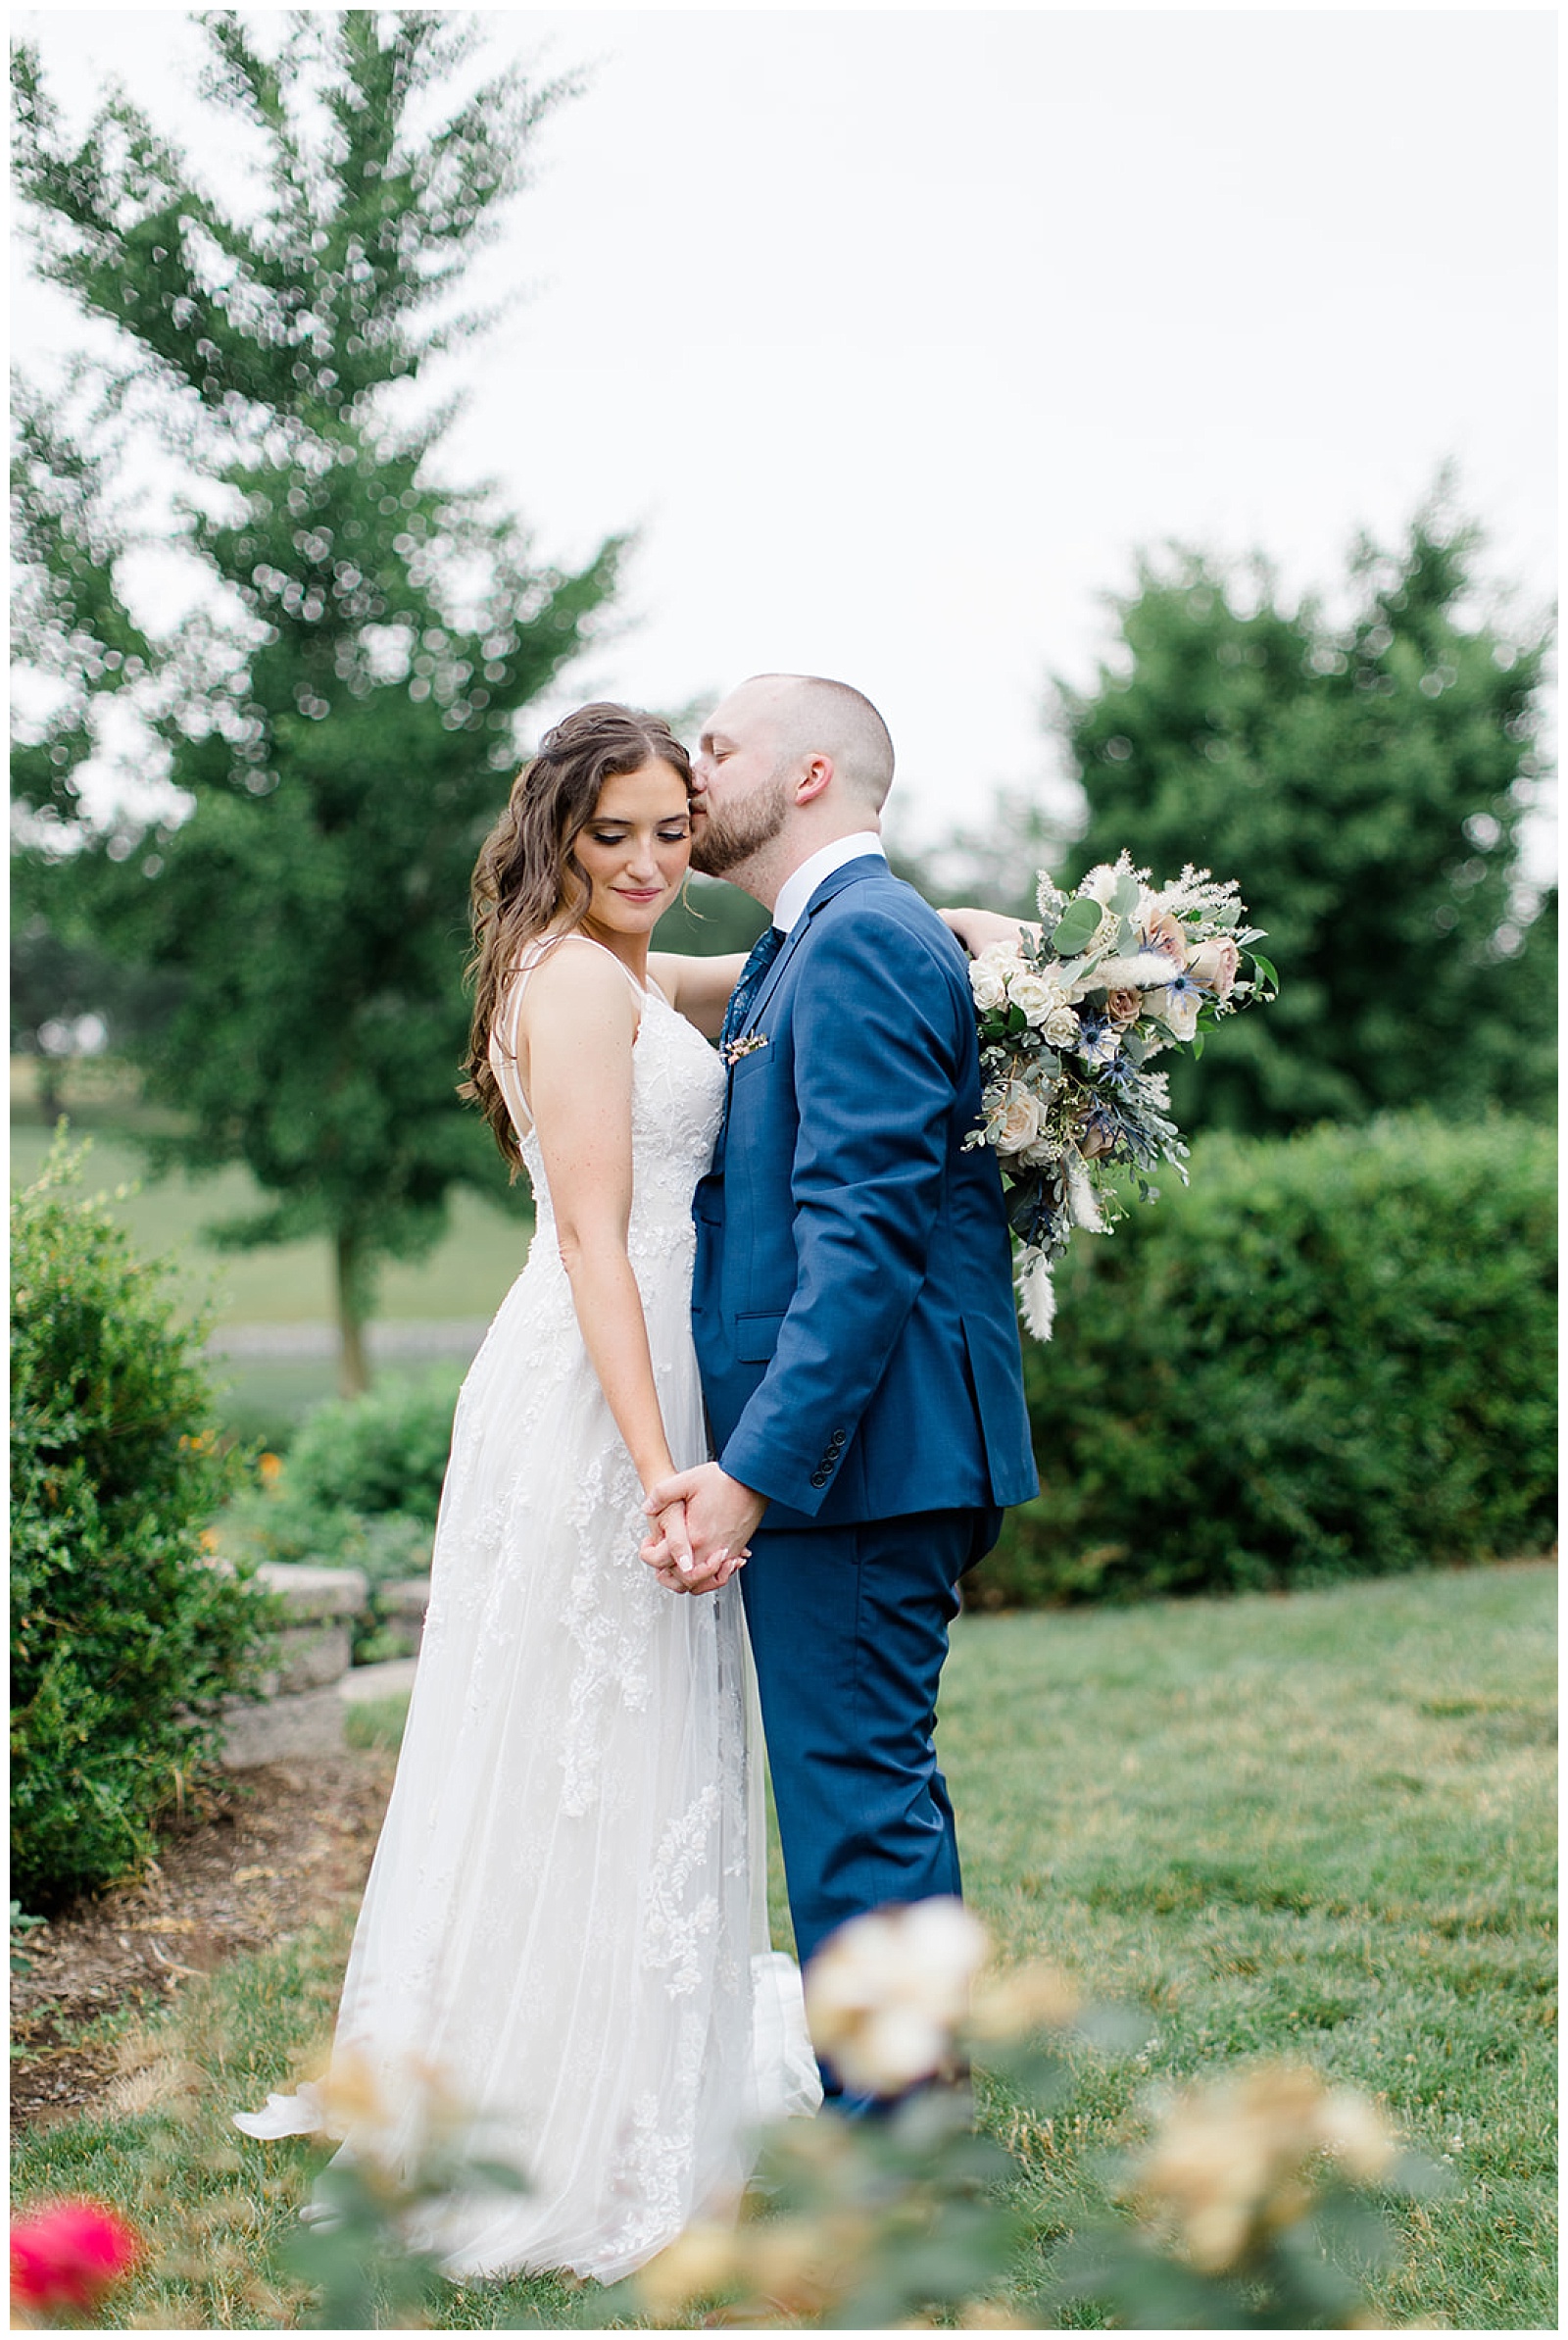 couple takes wedding portraits at lakefield weddings, a modern barn wedding venue